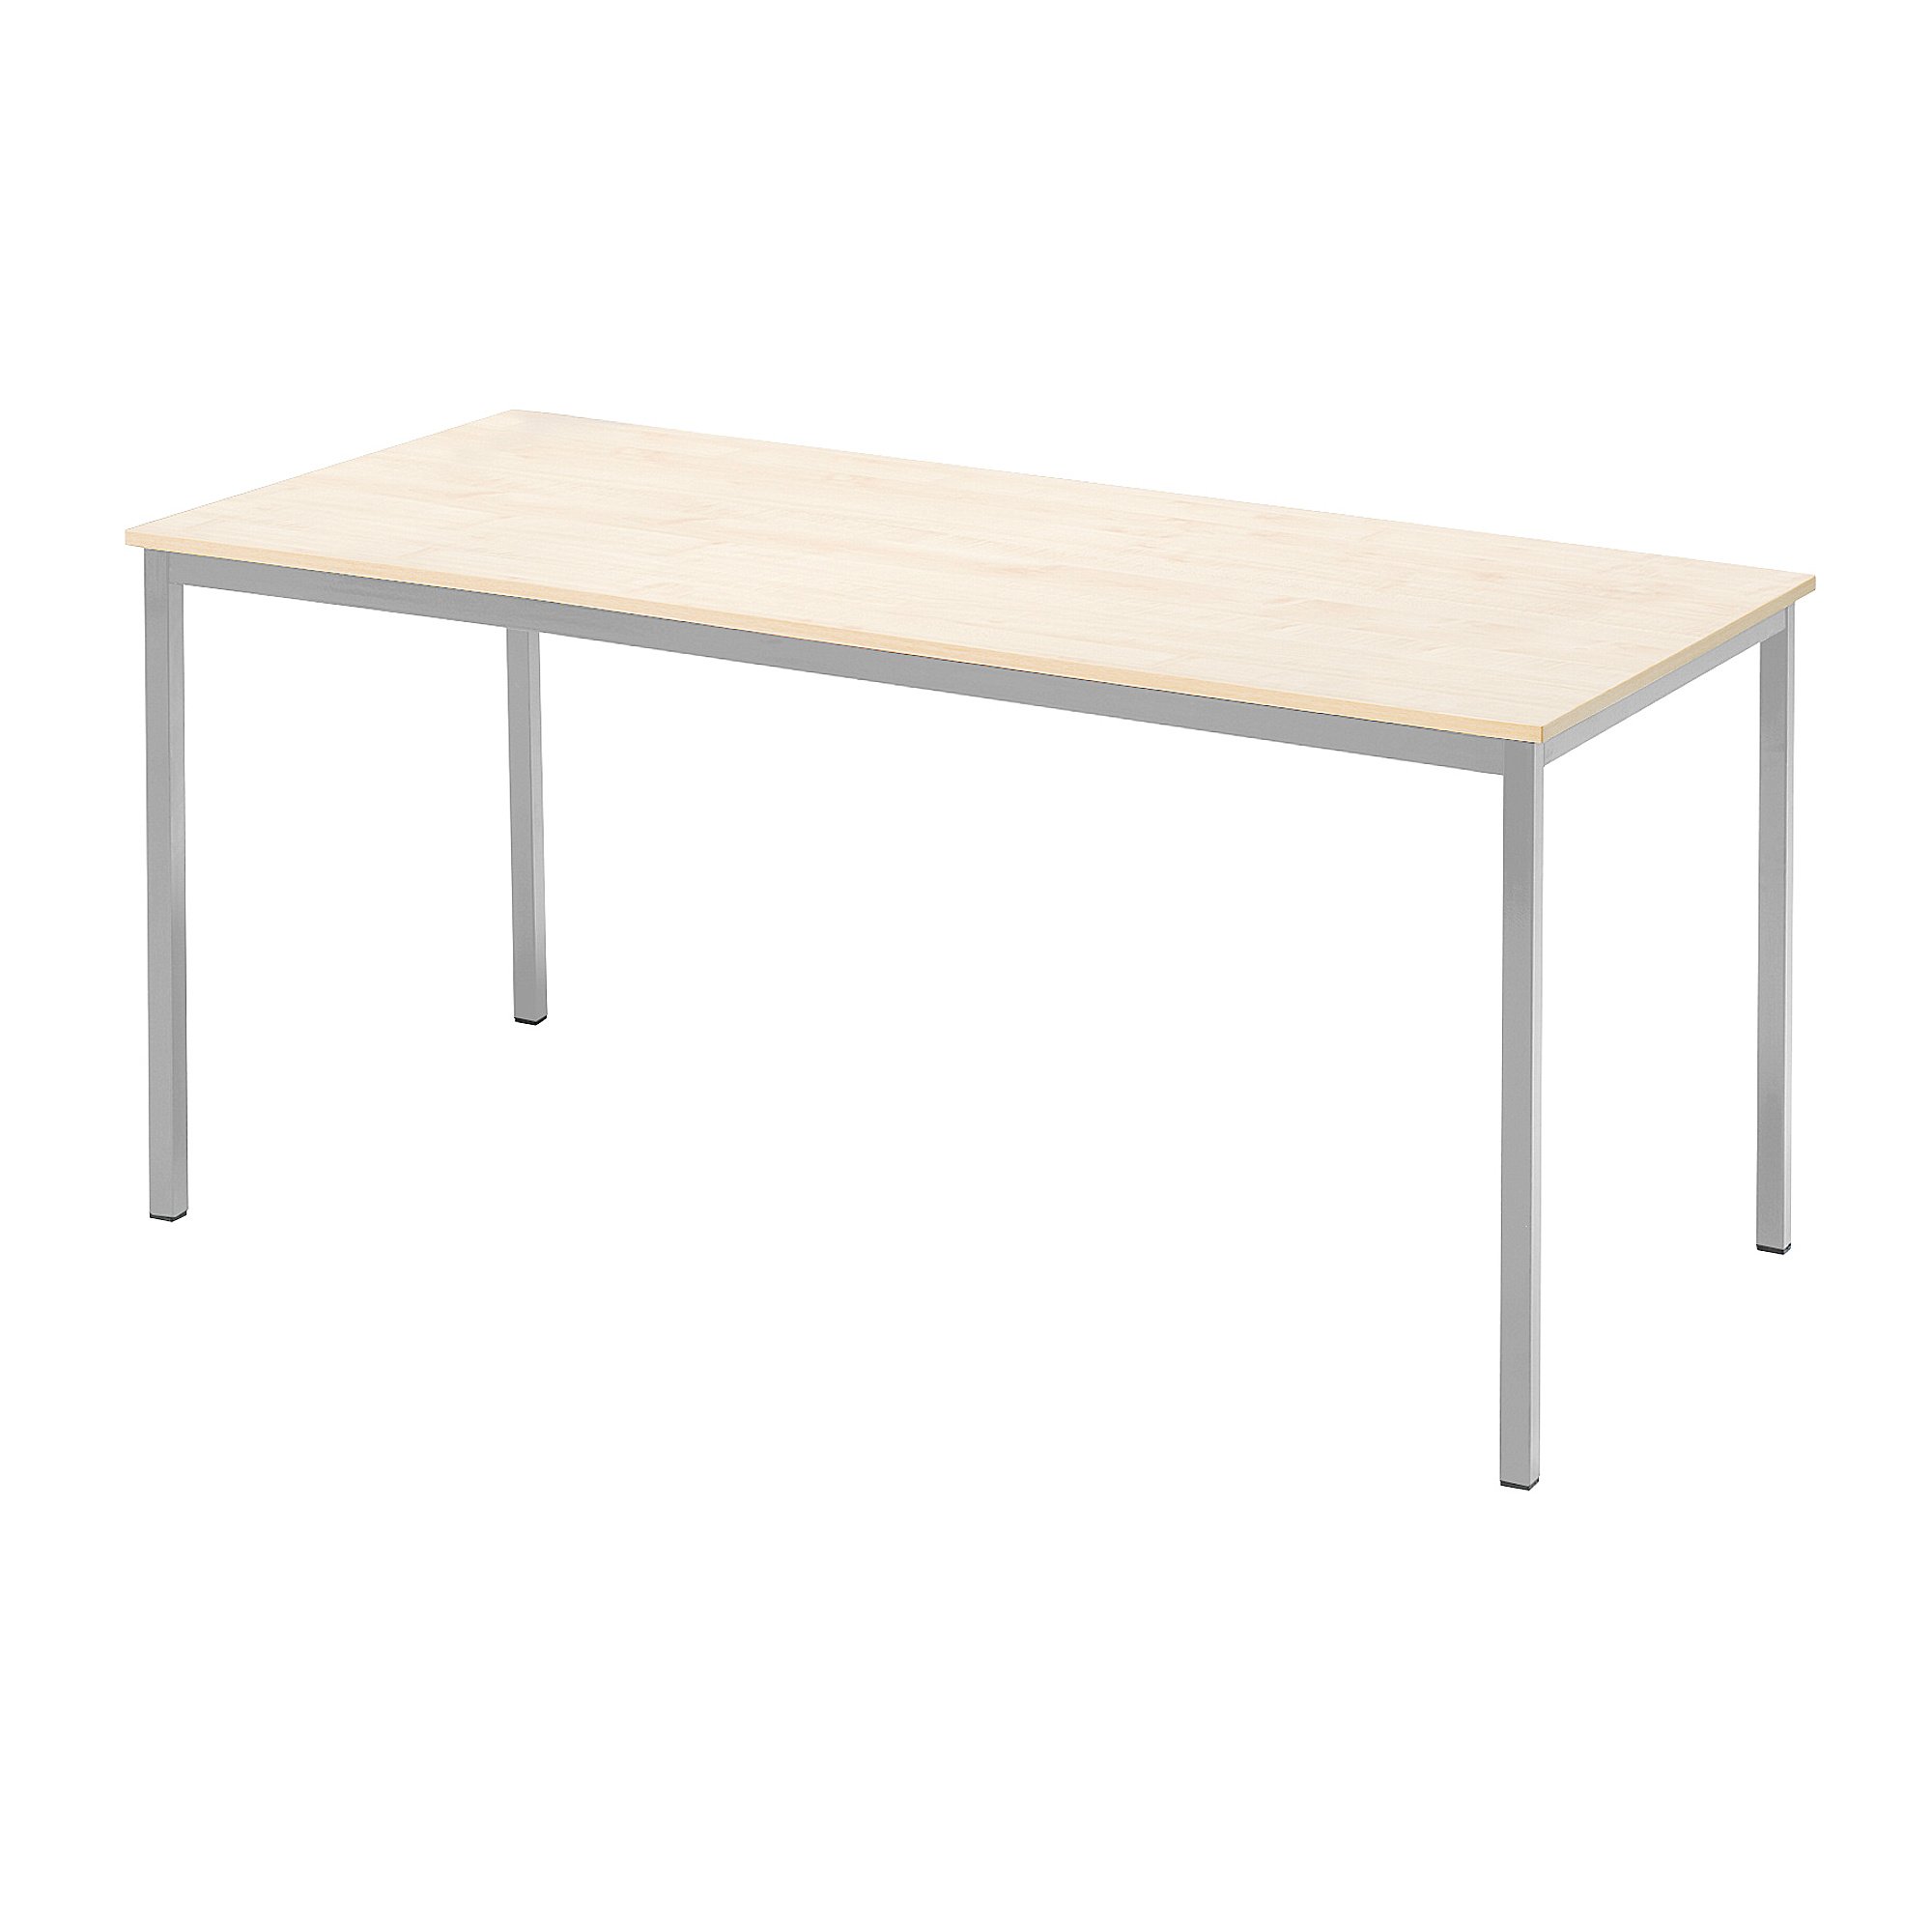 E-shop Jedálenský stôl JAMIE, 1800x800 mm, brezový laminát, šedá podnož